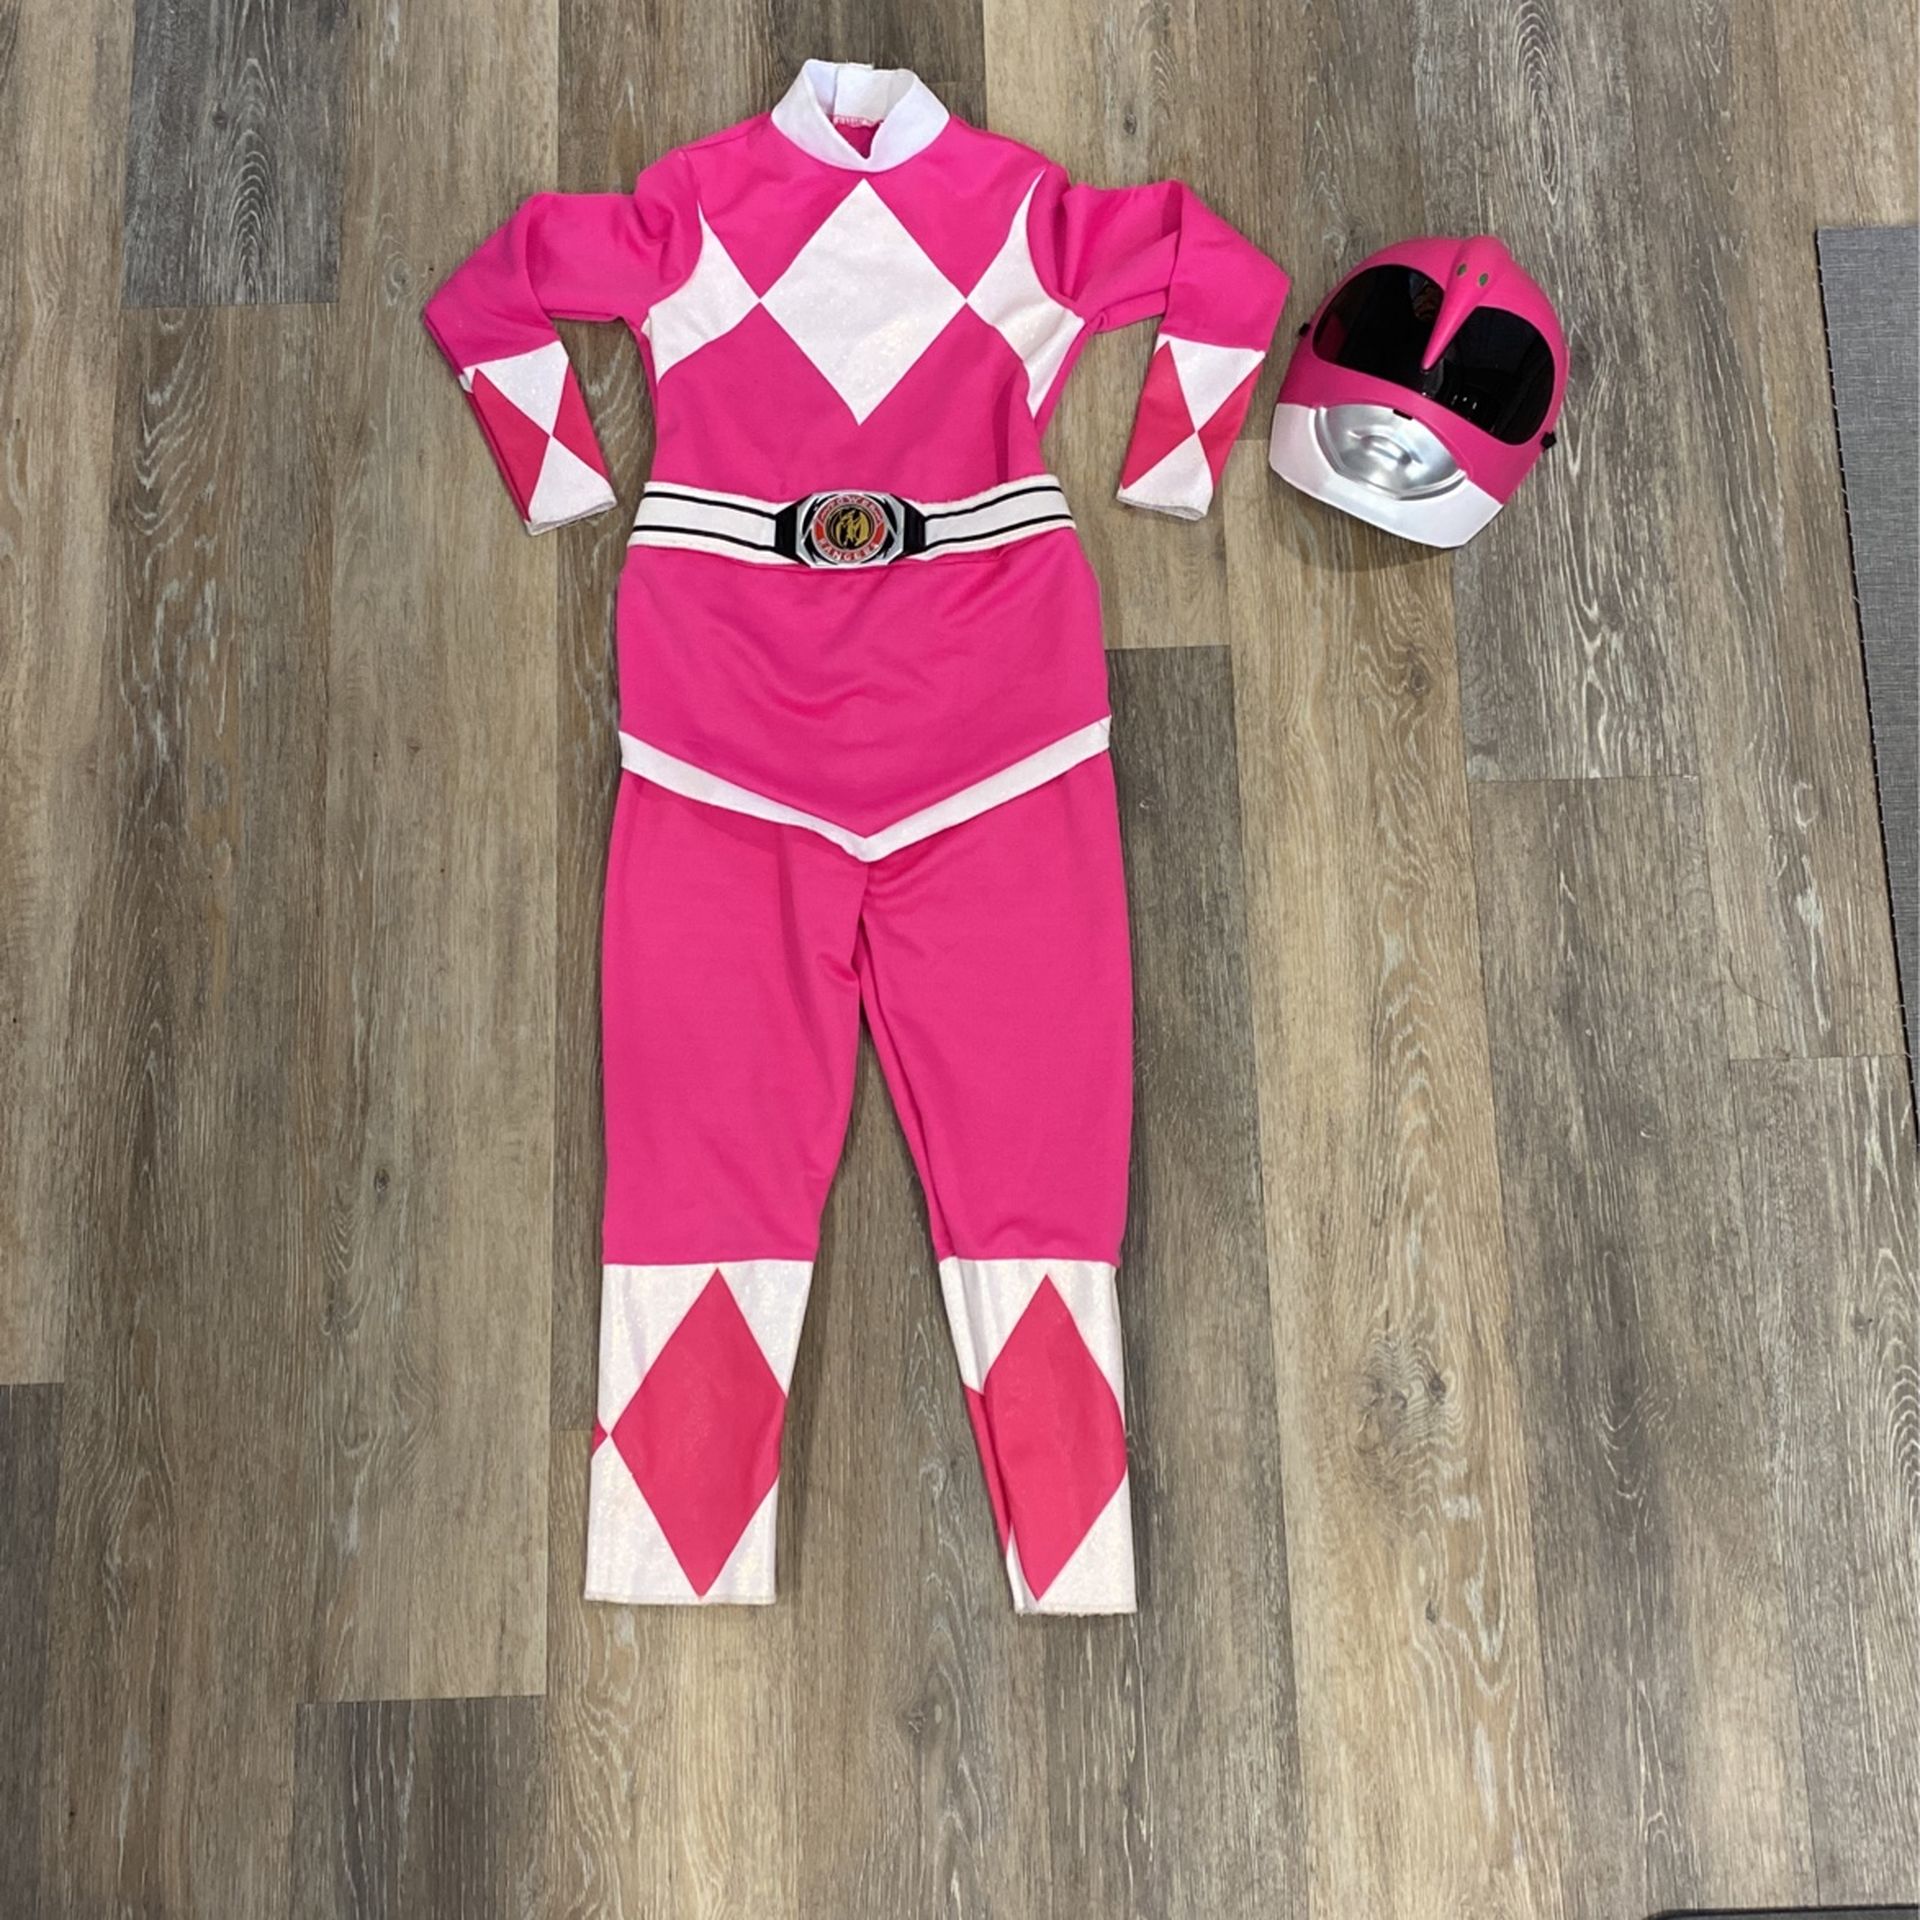 Pink Power Ranger Costume - Kid Small